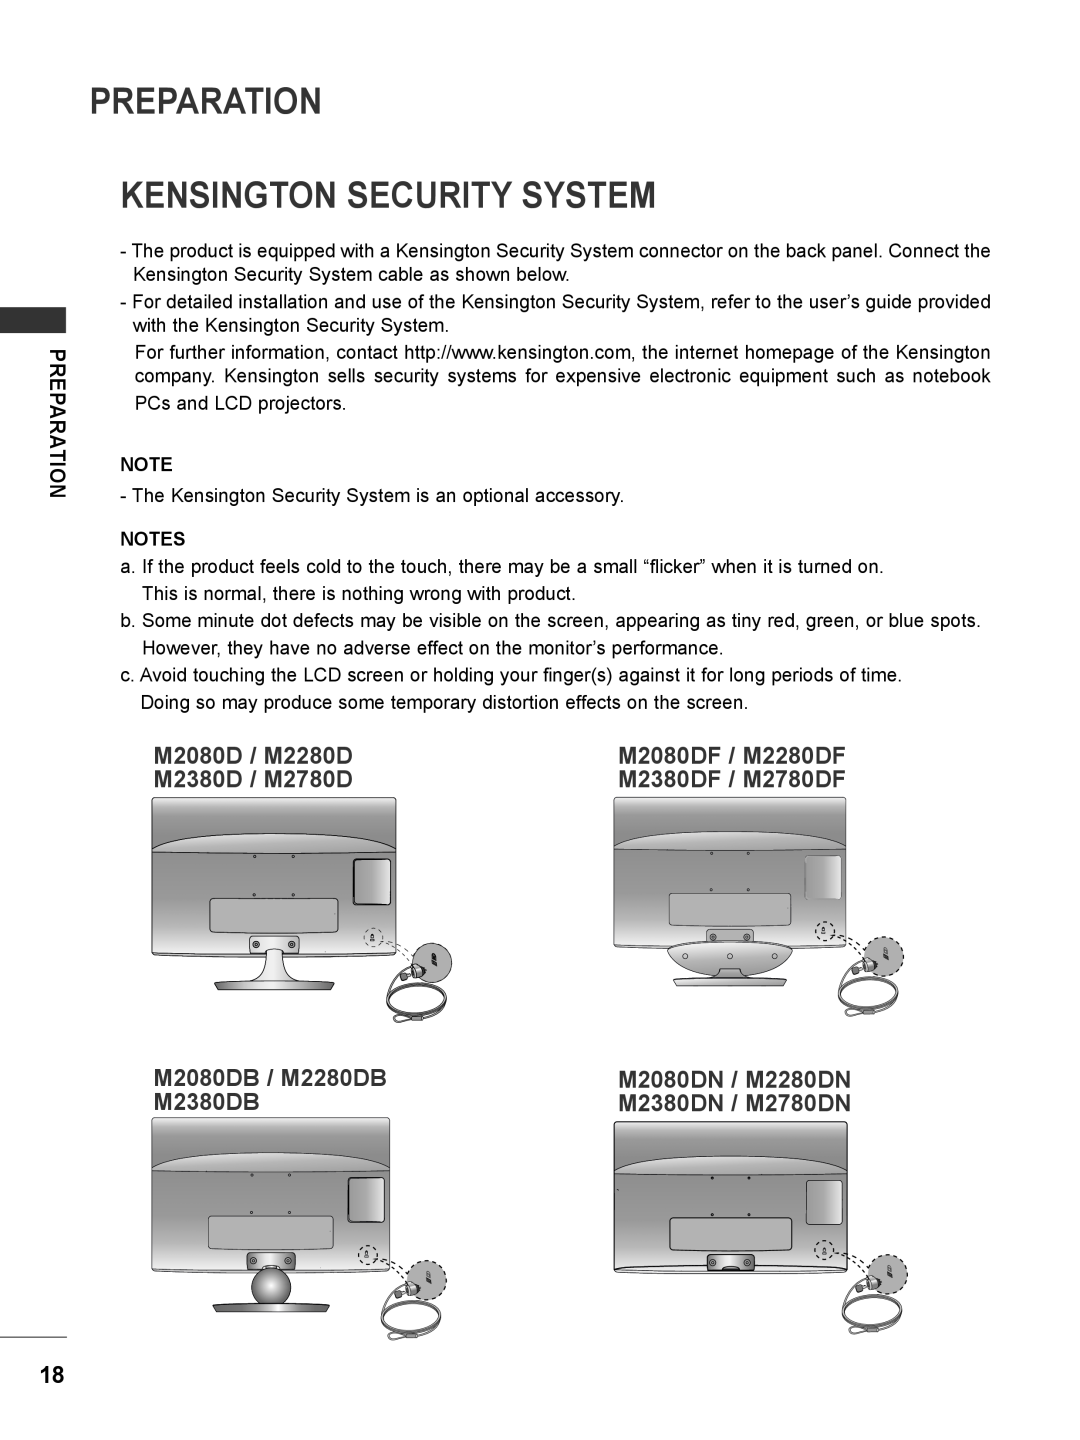 LG Electronics M2380DB Preparation Kensington Security System, M2080DF / M2280DF, M2380DF / M2780DF, M2080DN / M2280DN 